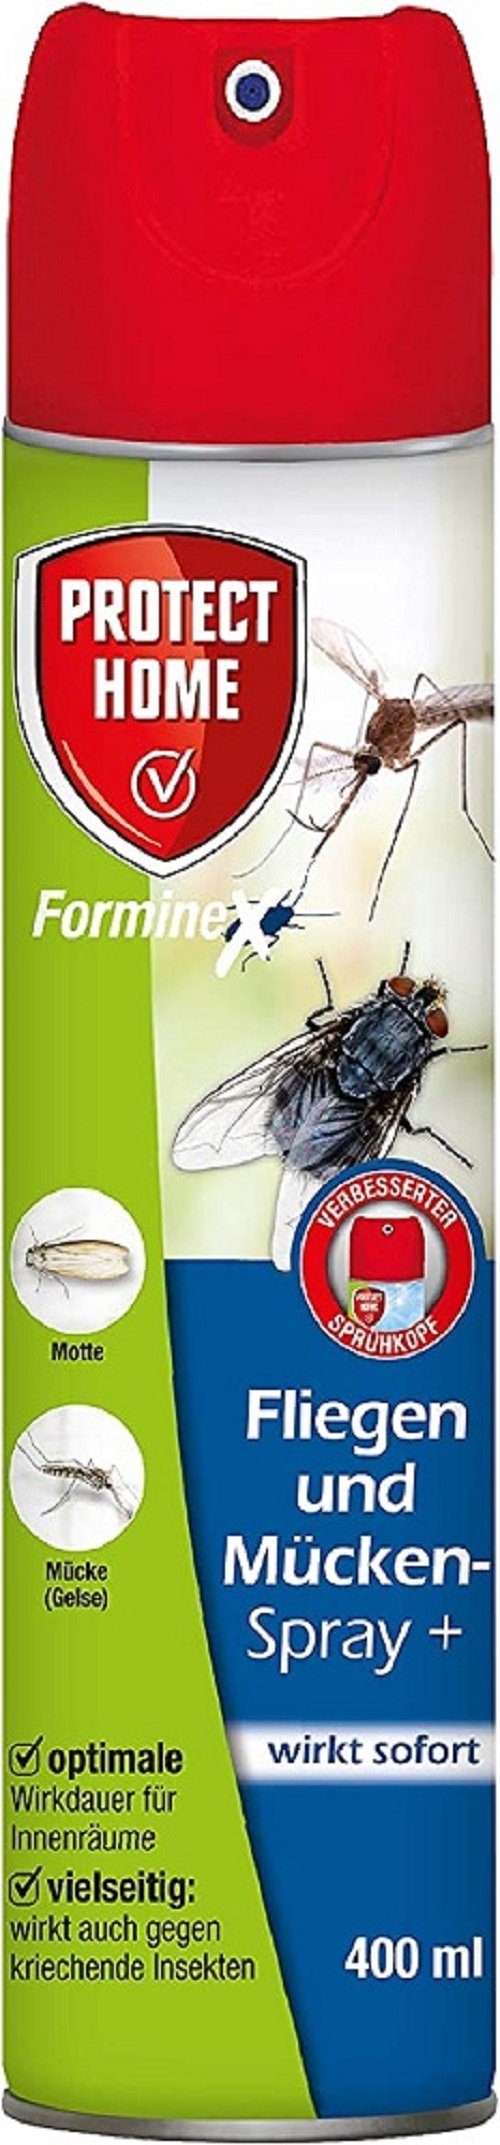 Mücken Home Forminex ml Protect Insektenspray u. 400 Fliegen- Spray+ 400ml, Protect Home